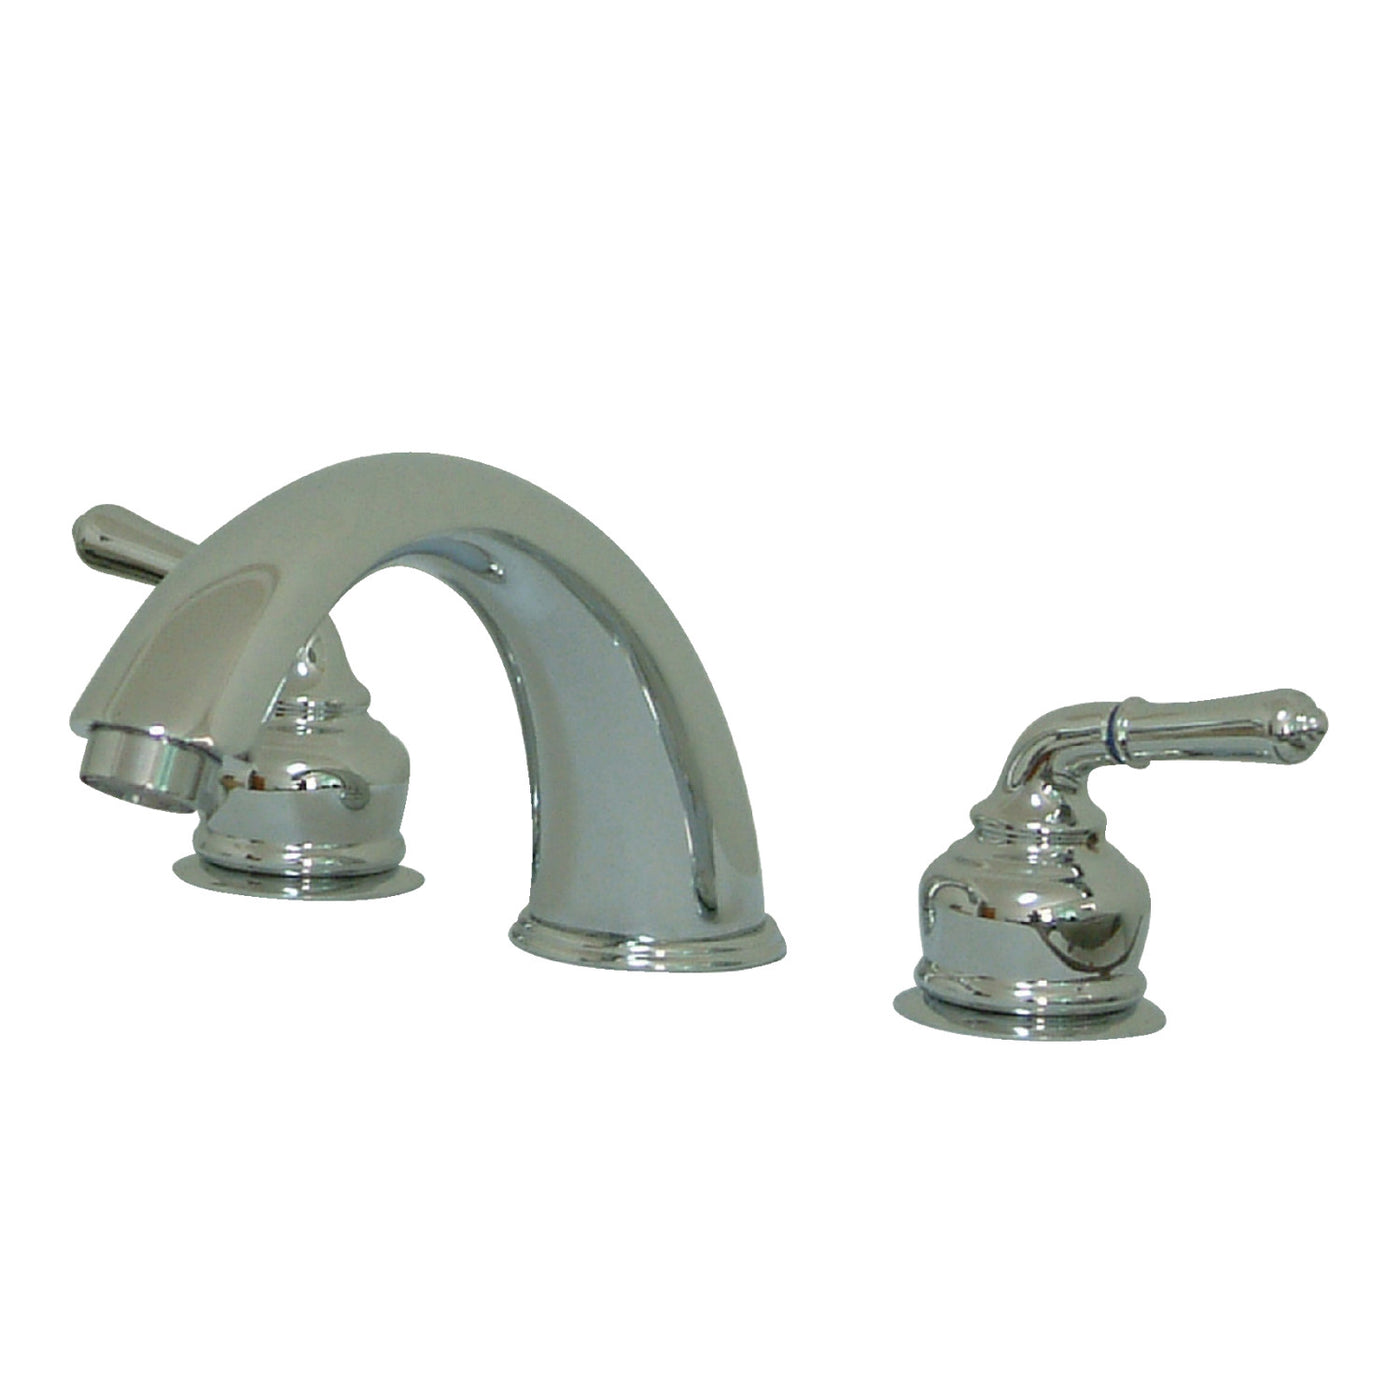 Elements of Design EB361 Roman Tub Faucet, Polished Chrome